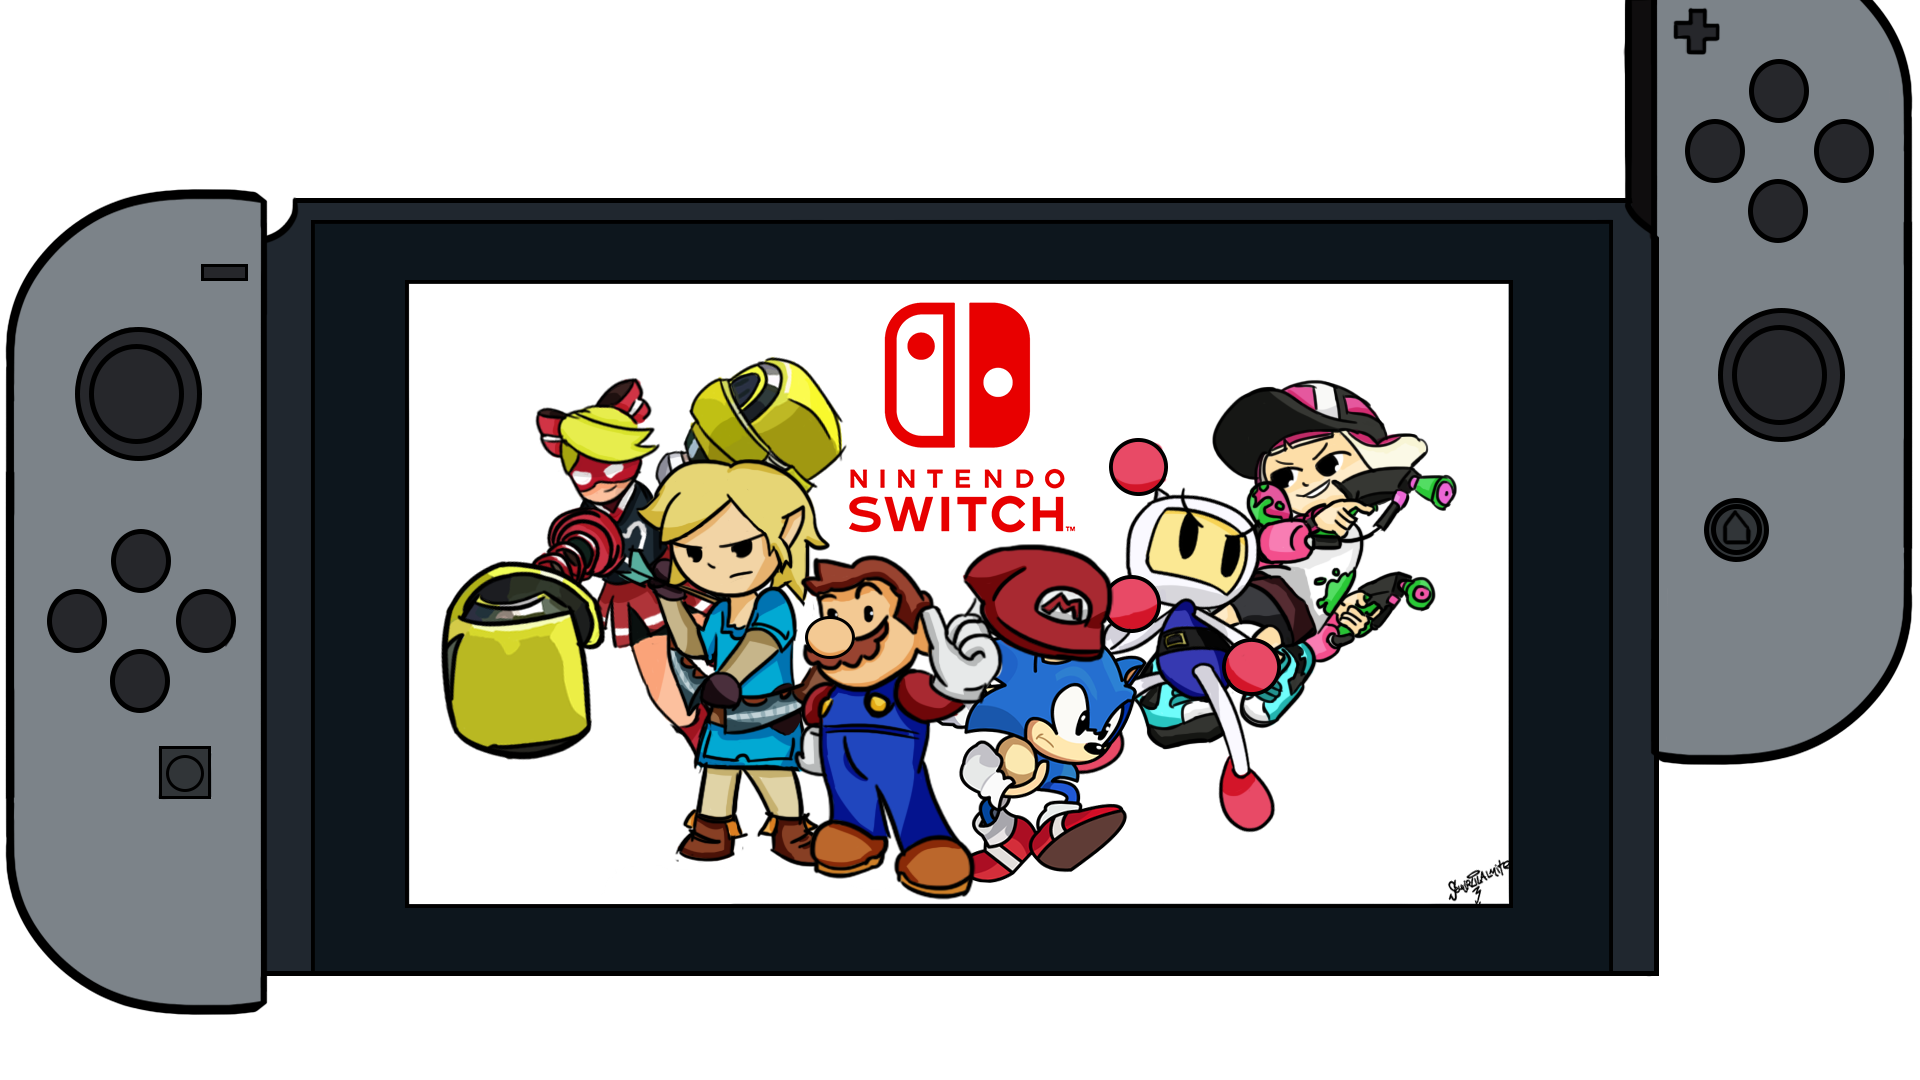 Nintendo switch fallout. Приставка Нинтендо свитч. Игровая приставка Нинтендо свитч. Nintendo Switch игры для Nintendo Switch. Изображение Нинтендо свитч.